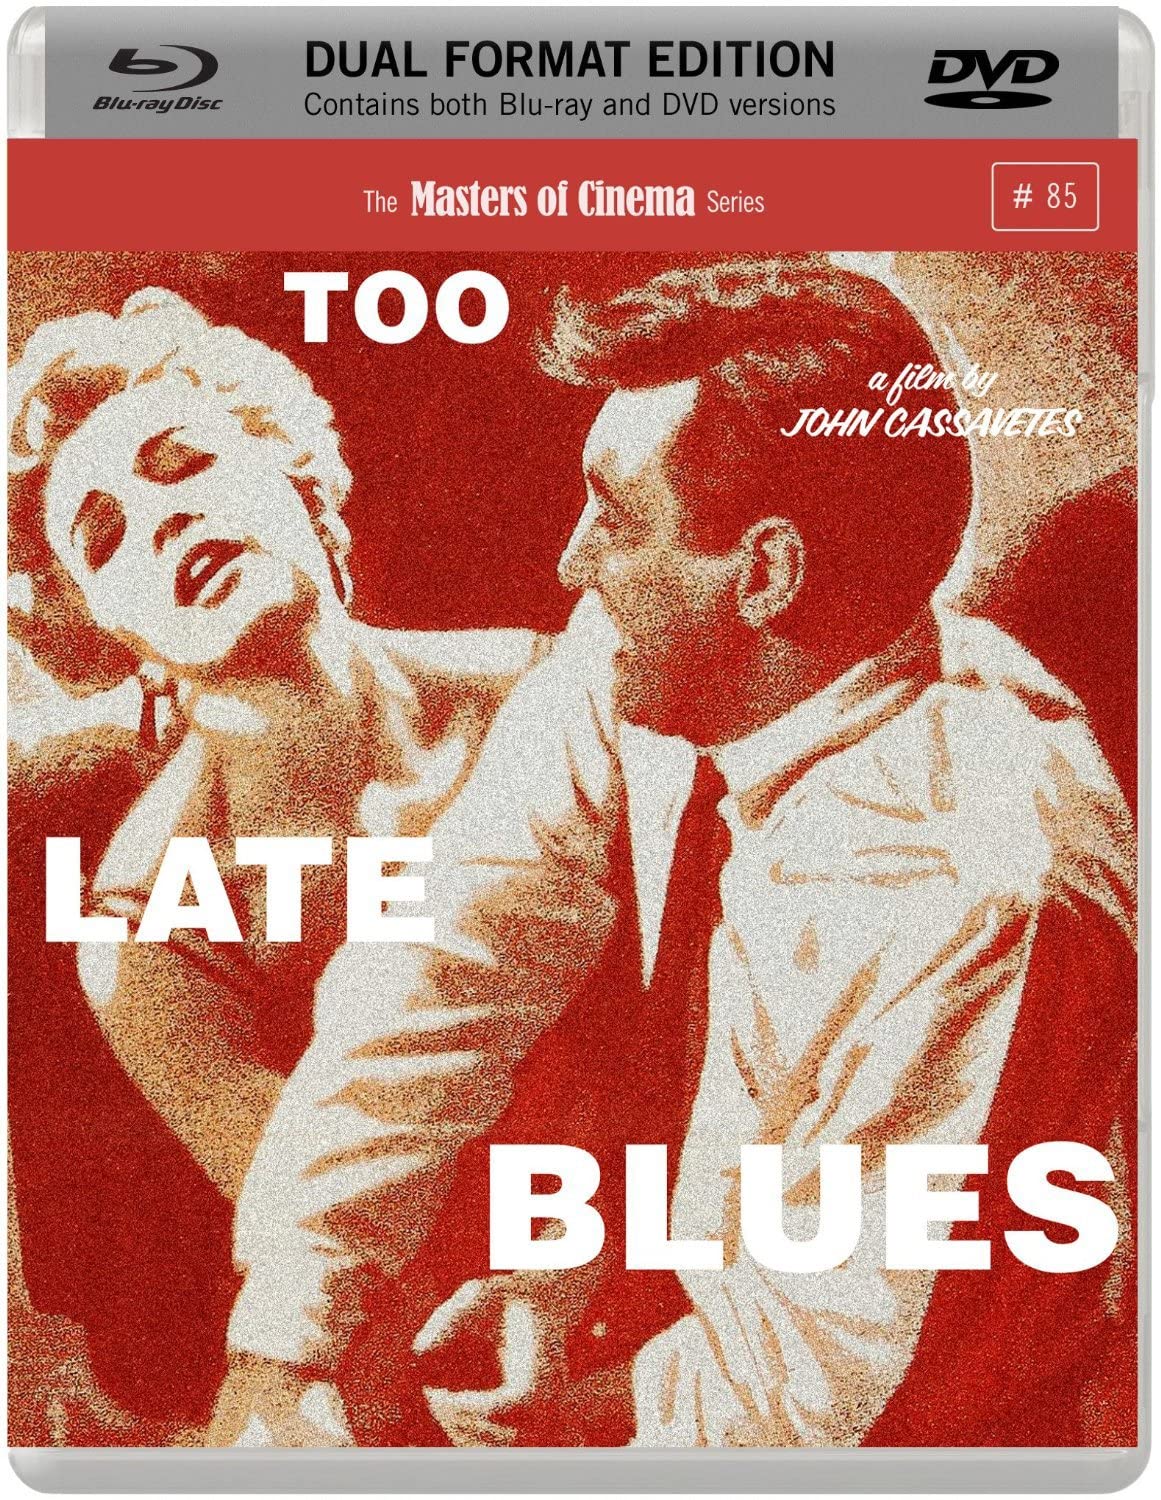 Too Late Blues